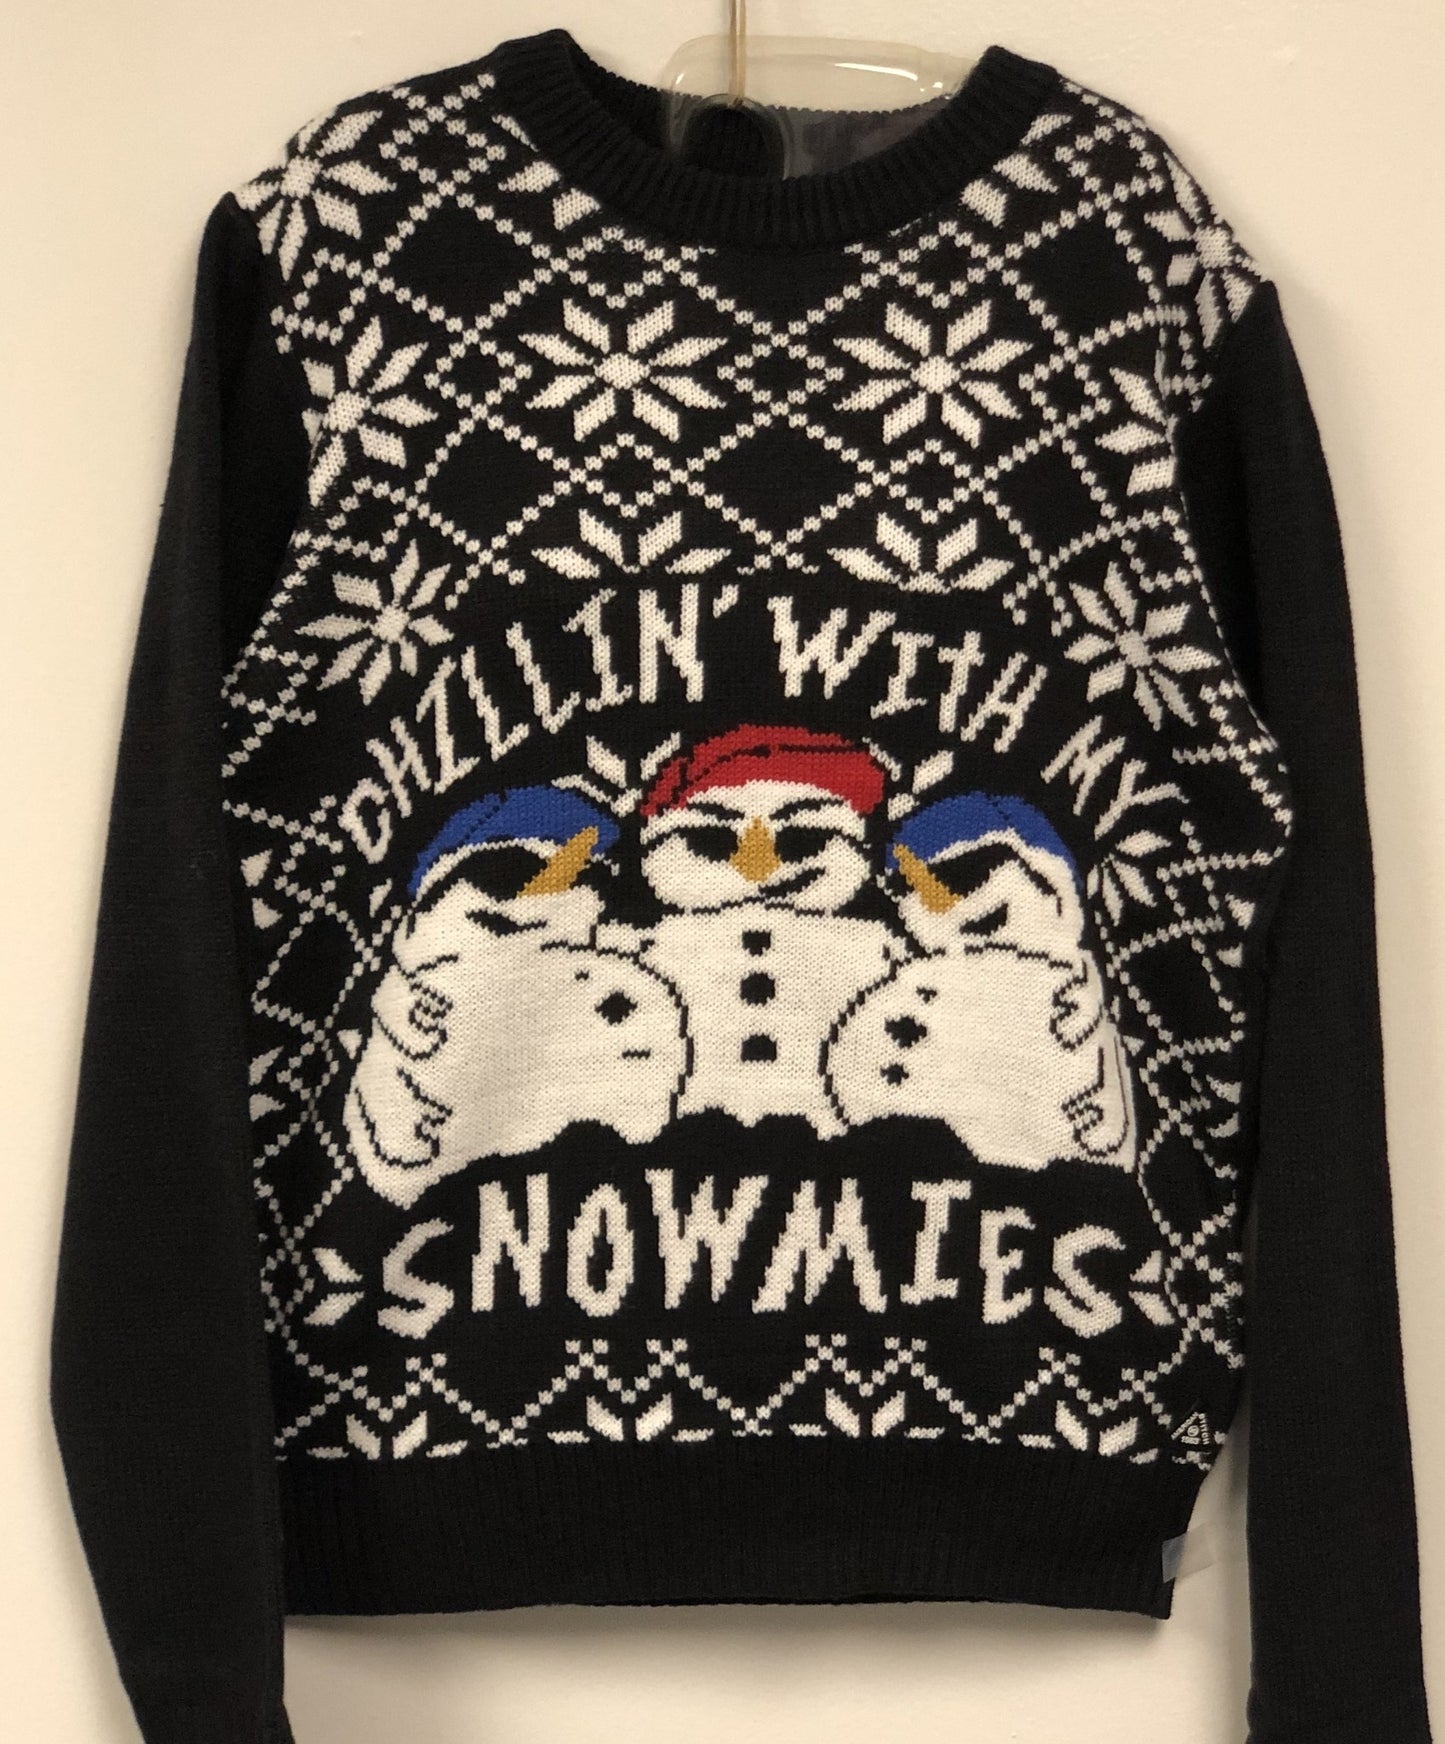 Men's Christmas Sweater: Snowmies